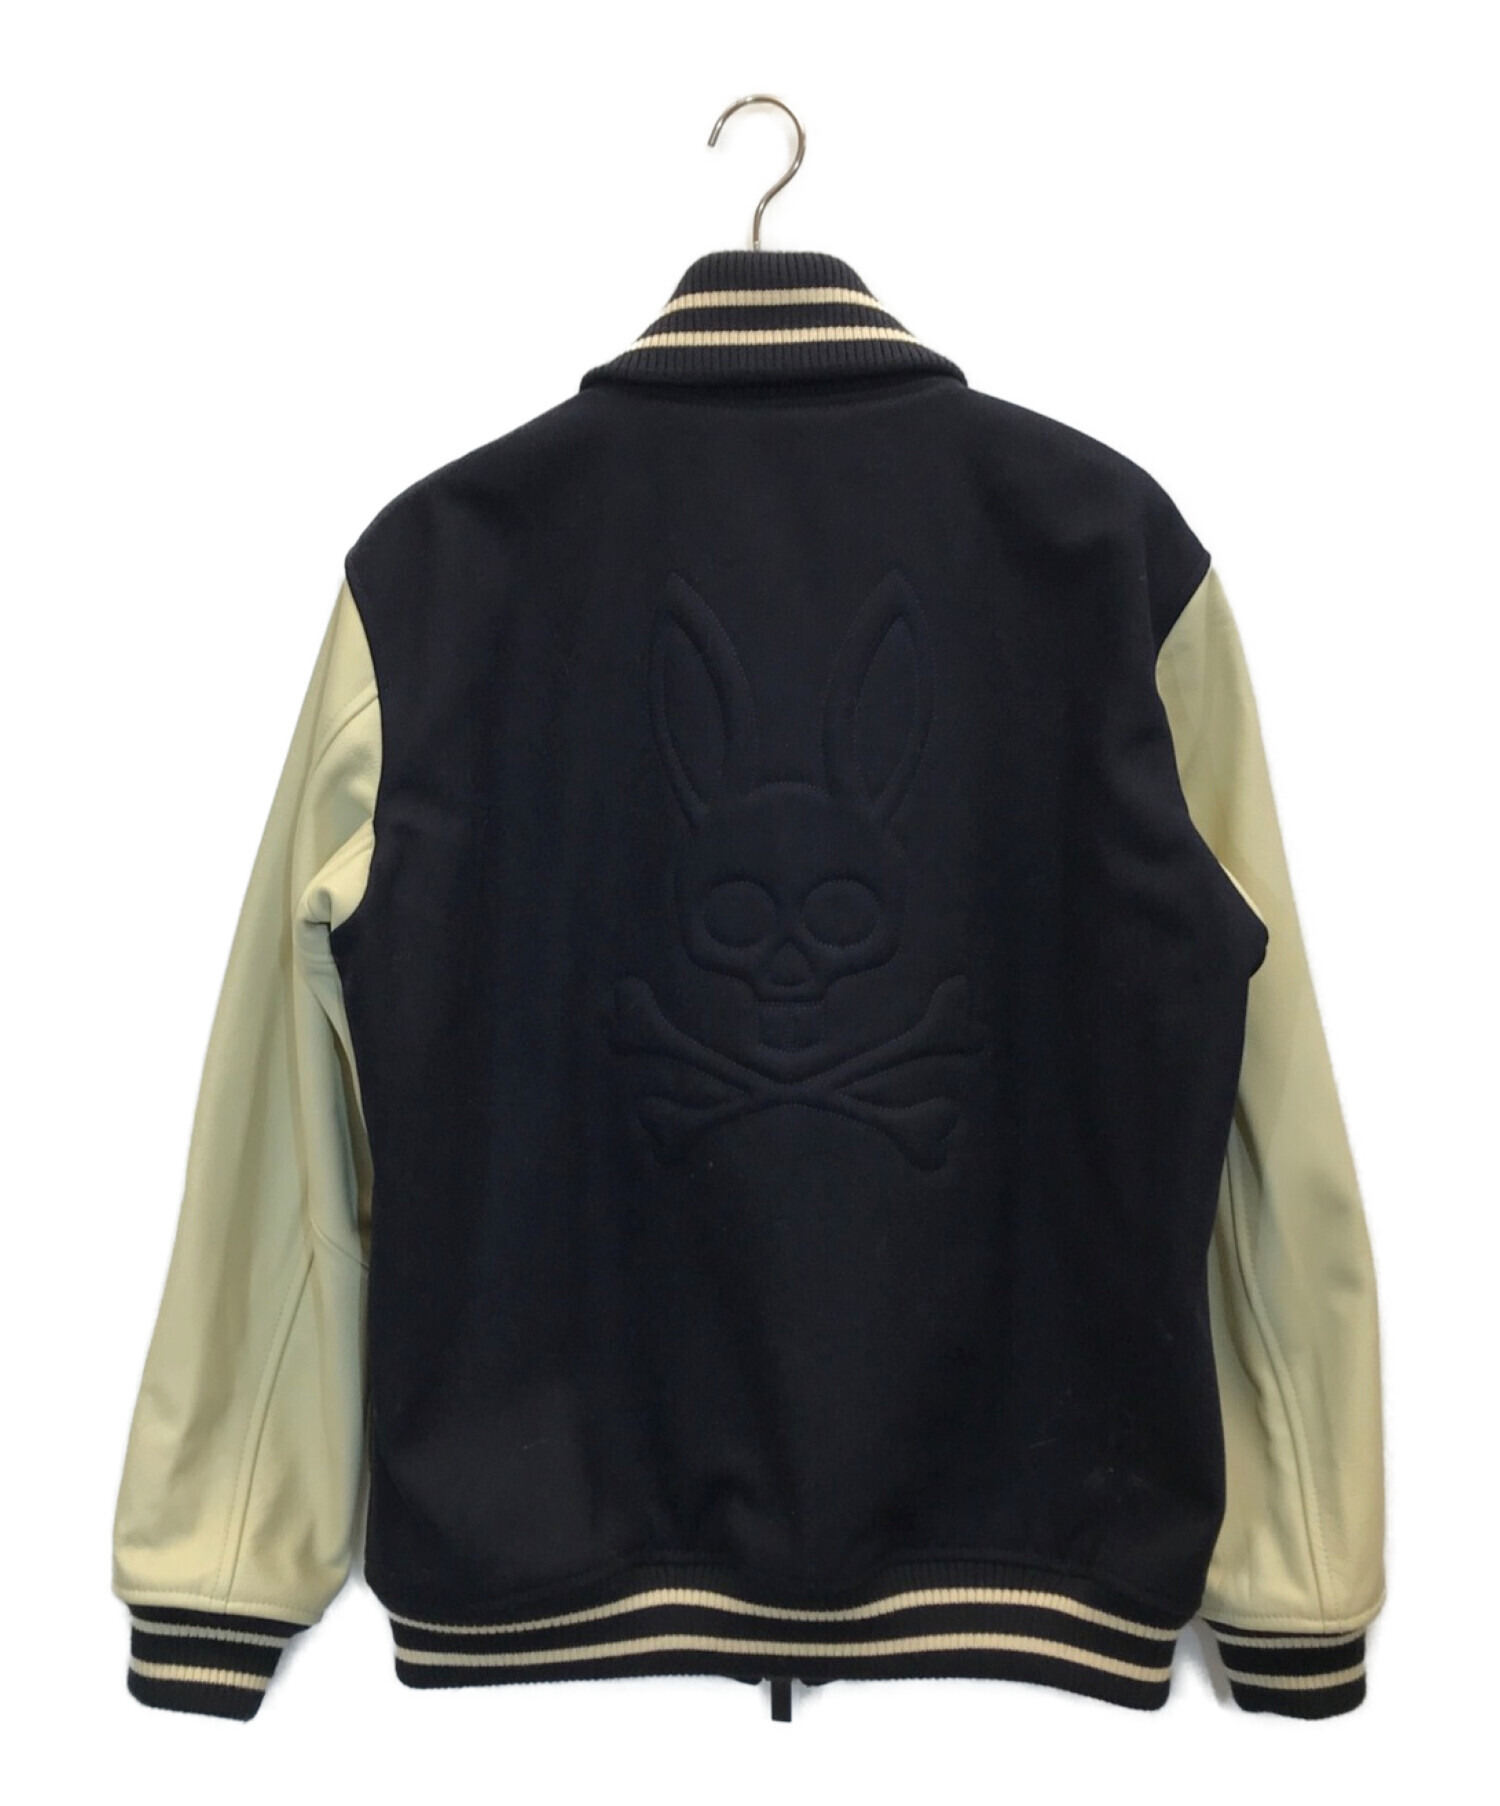 skookum (スクーカム) Psycho Bunny (サイコ バニー) コラボ アワードジャケット ブラック サイズ:XL